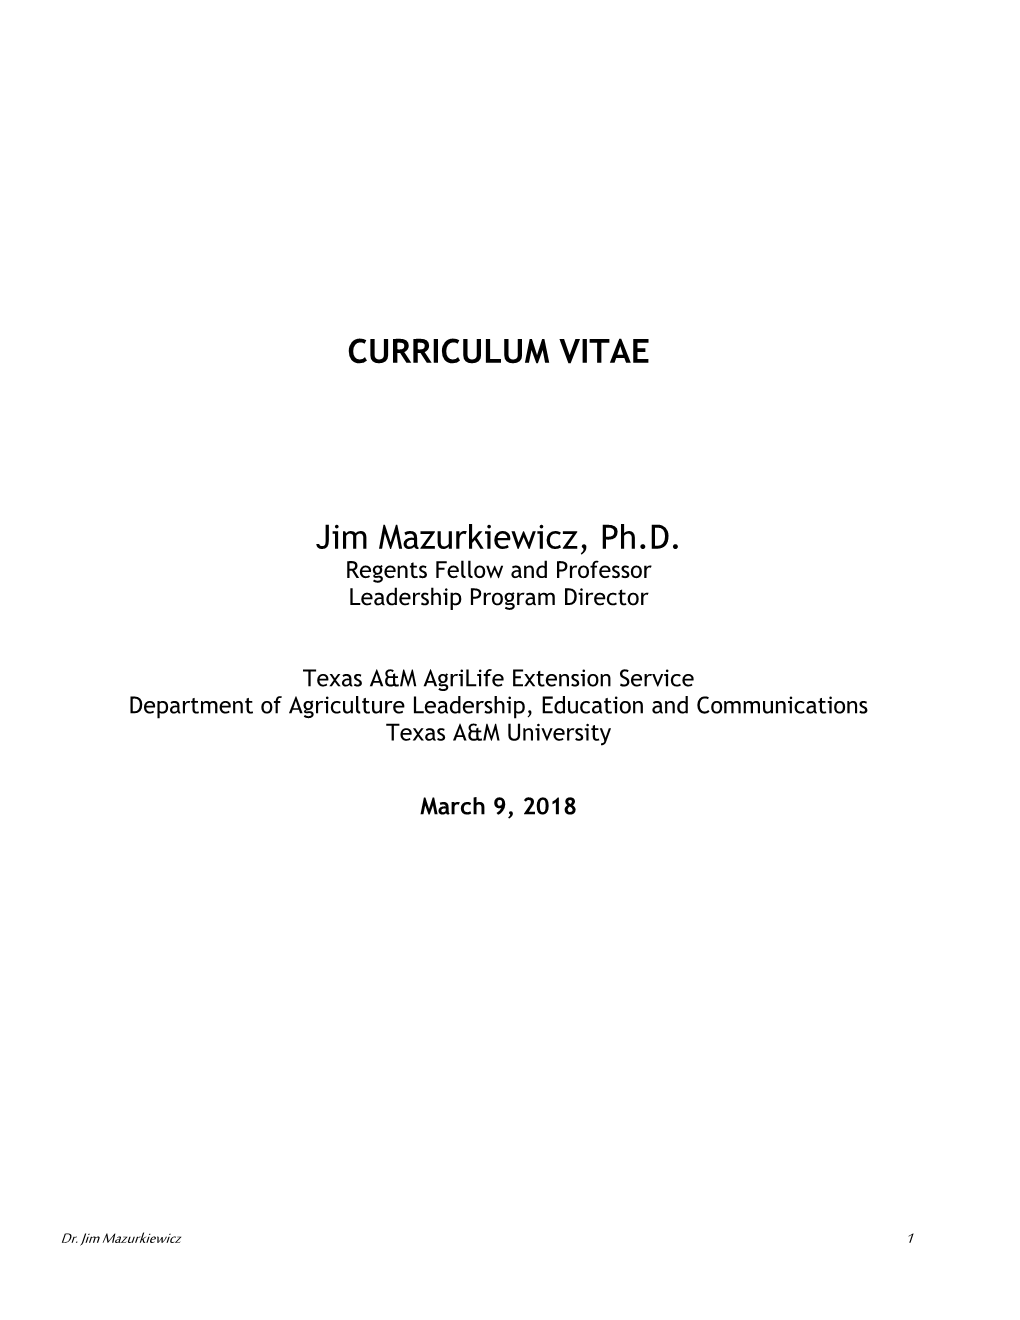 CURRICULUM VITAE Jim Mazurkiewicz, Ph.D